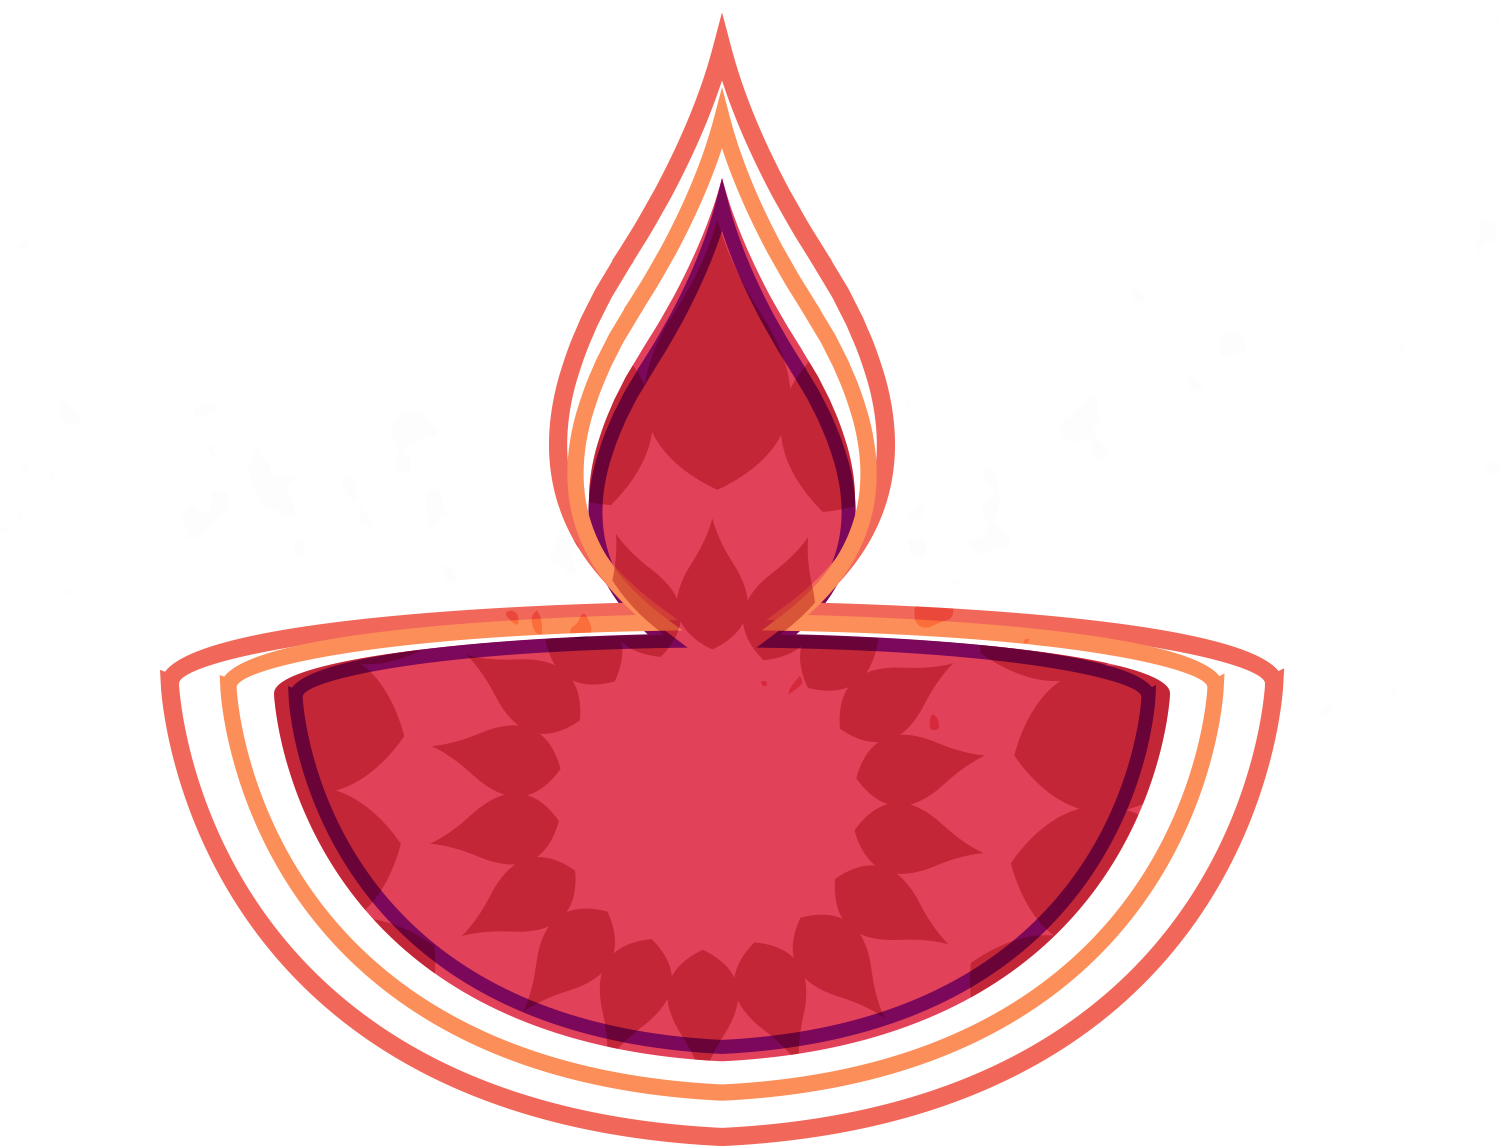 Abstract Diwali Lamp Illustration PNG image